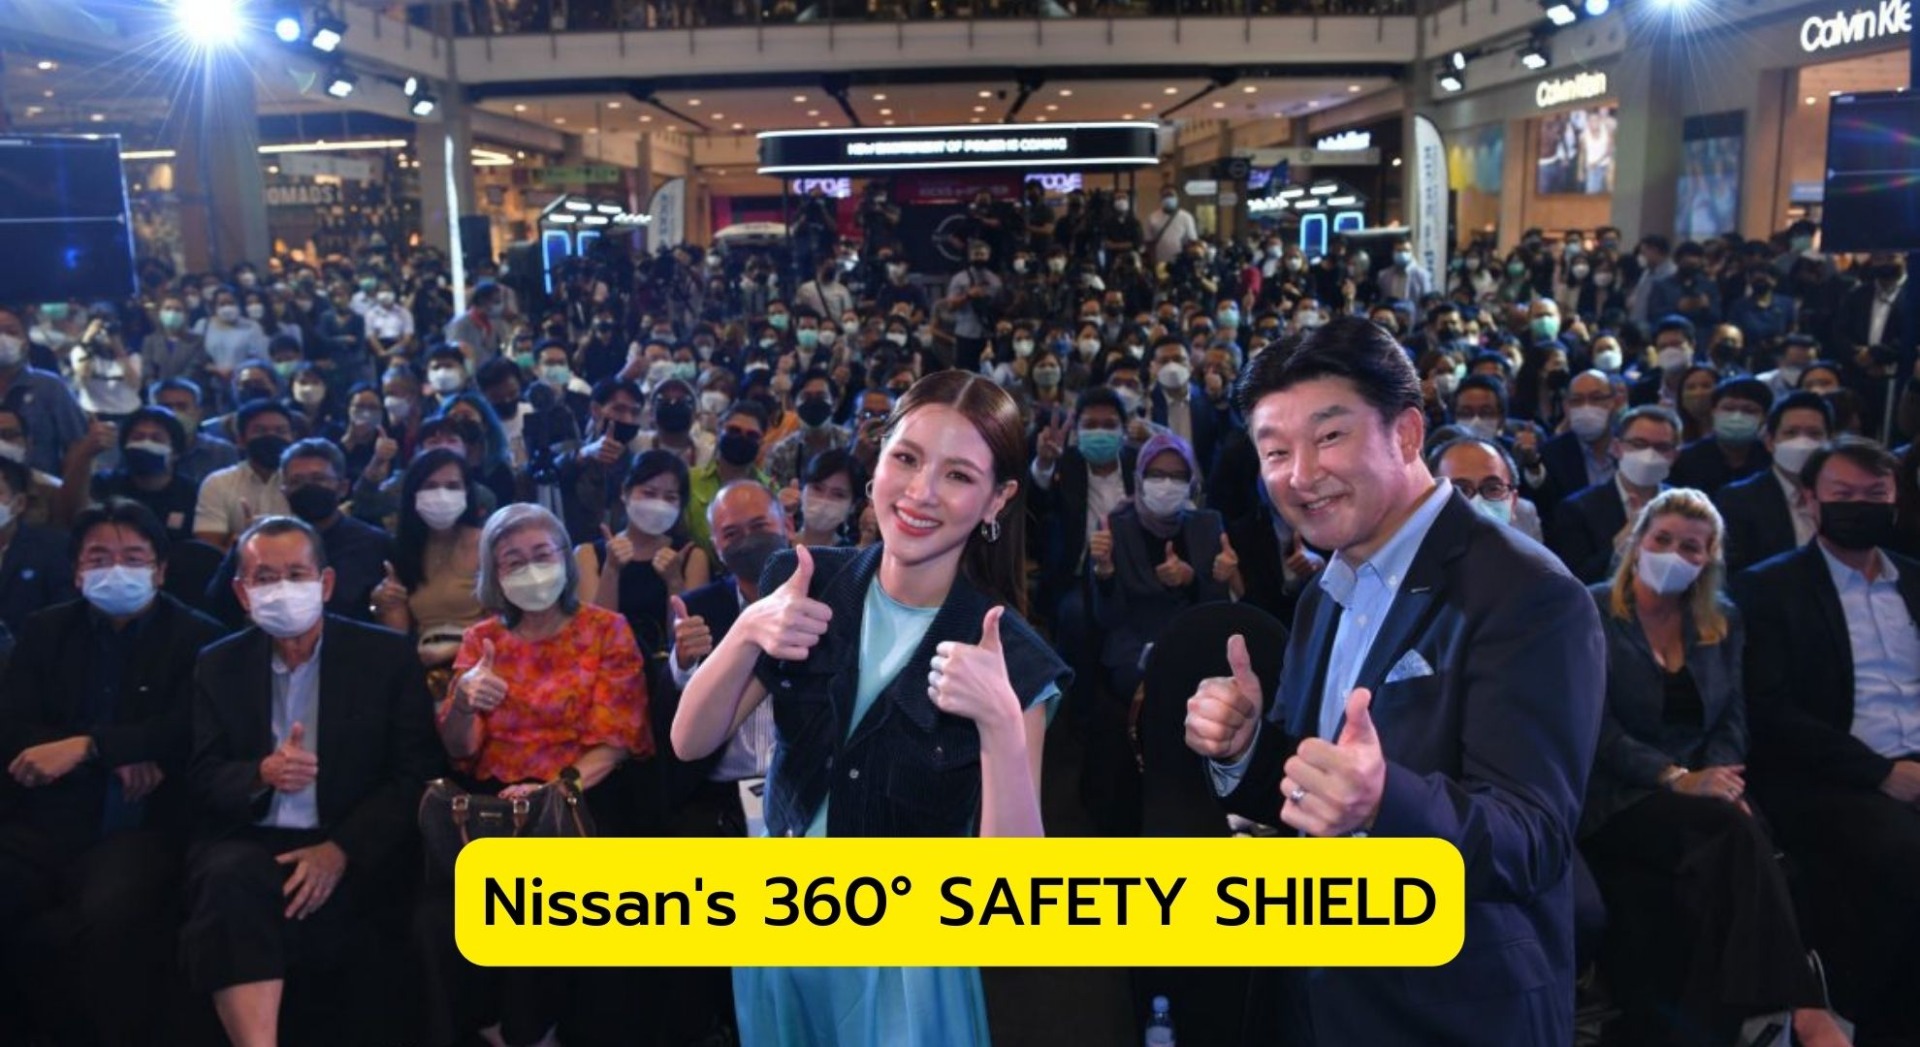 Nissan's 360° SAFETY SHIELD